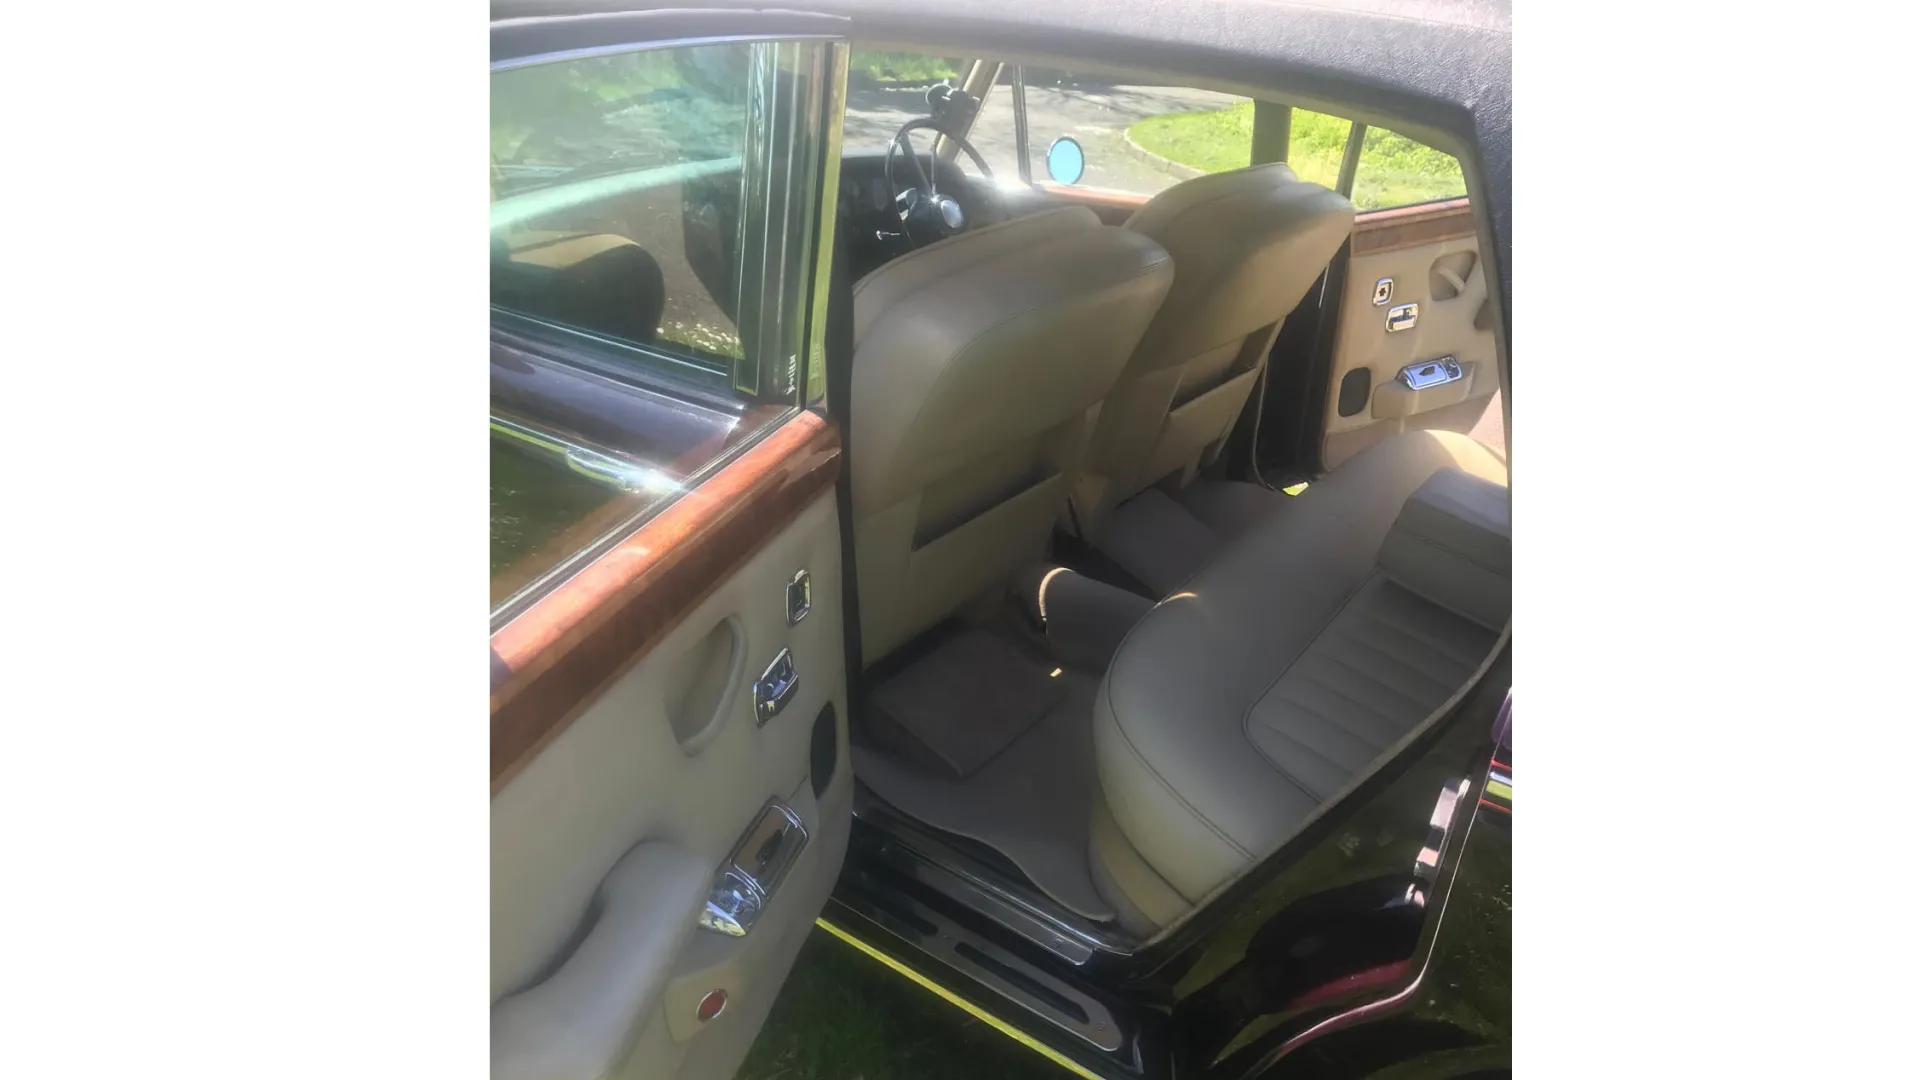 Cream interior rear seat with door open of Rolls-Royce. Showing large amount of legroom